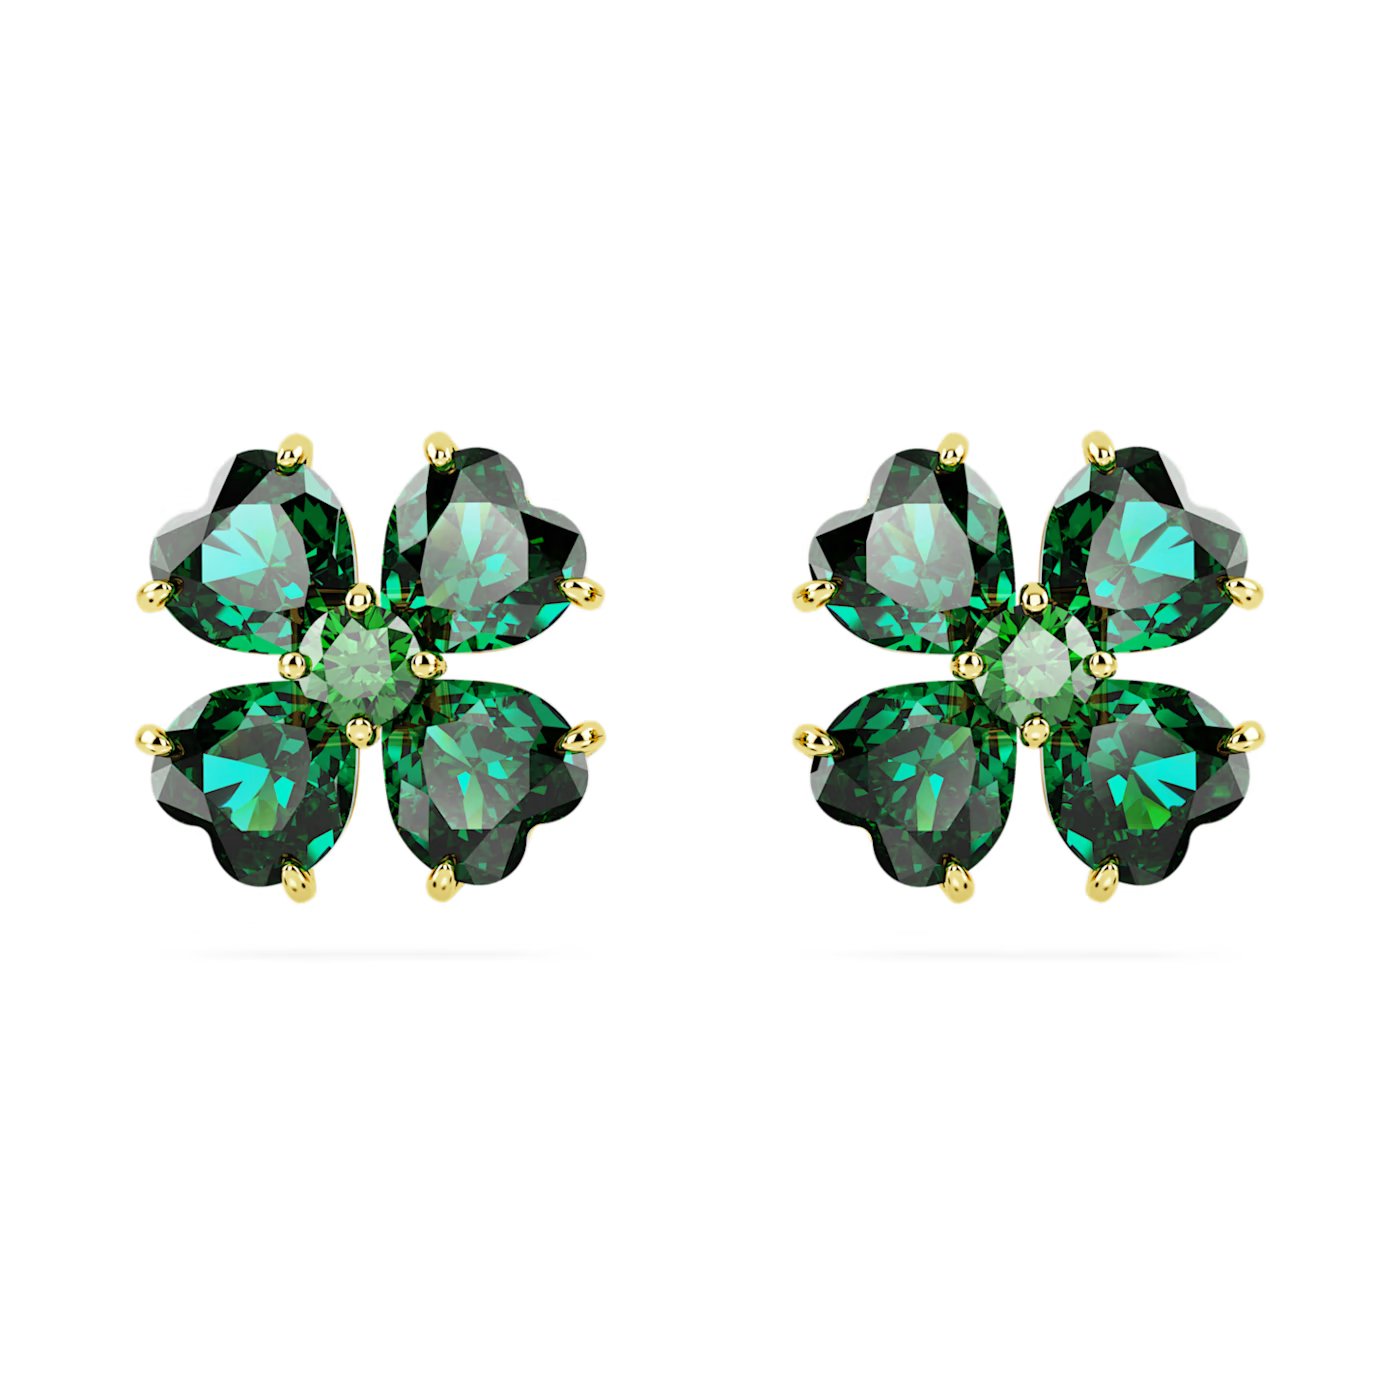 6491f45276a4a_idyllia-stud-earrings--clover--green--gold-tone-plated-swarovski-5666236.jpg